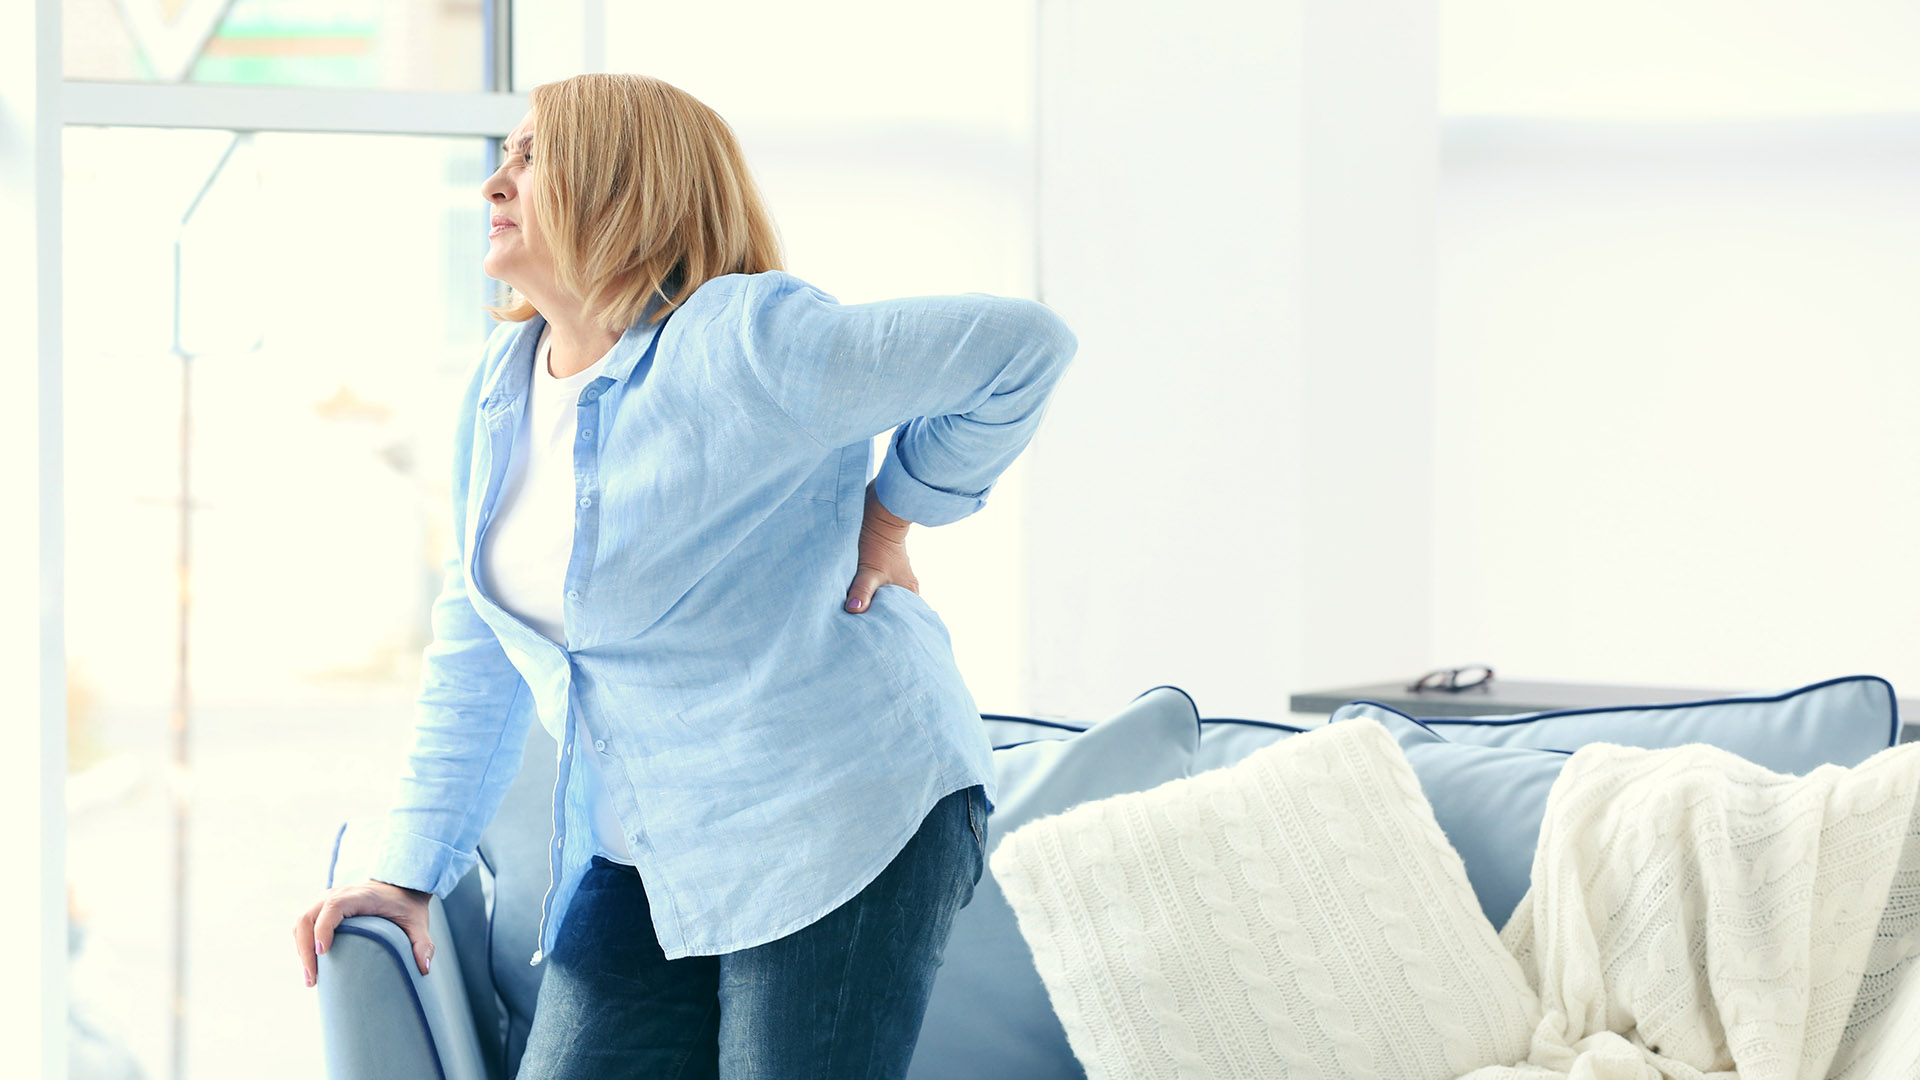 Stock image of a wmen showing chronic back pain. Shuttersock